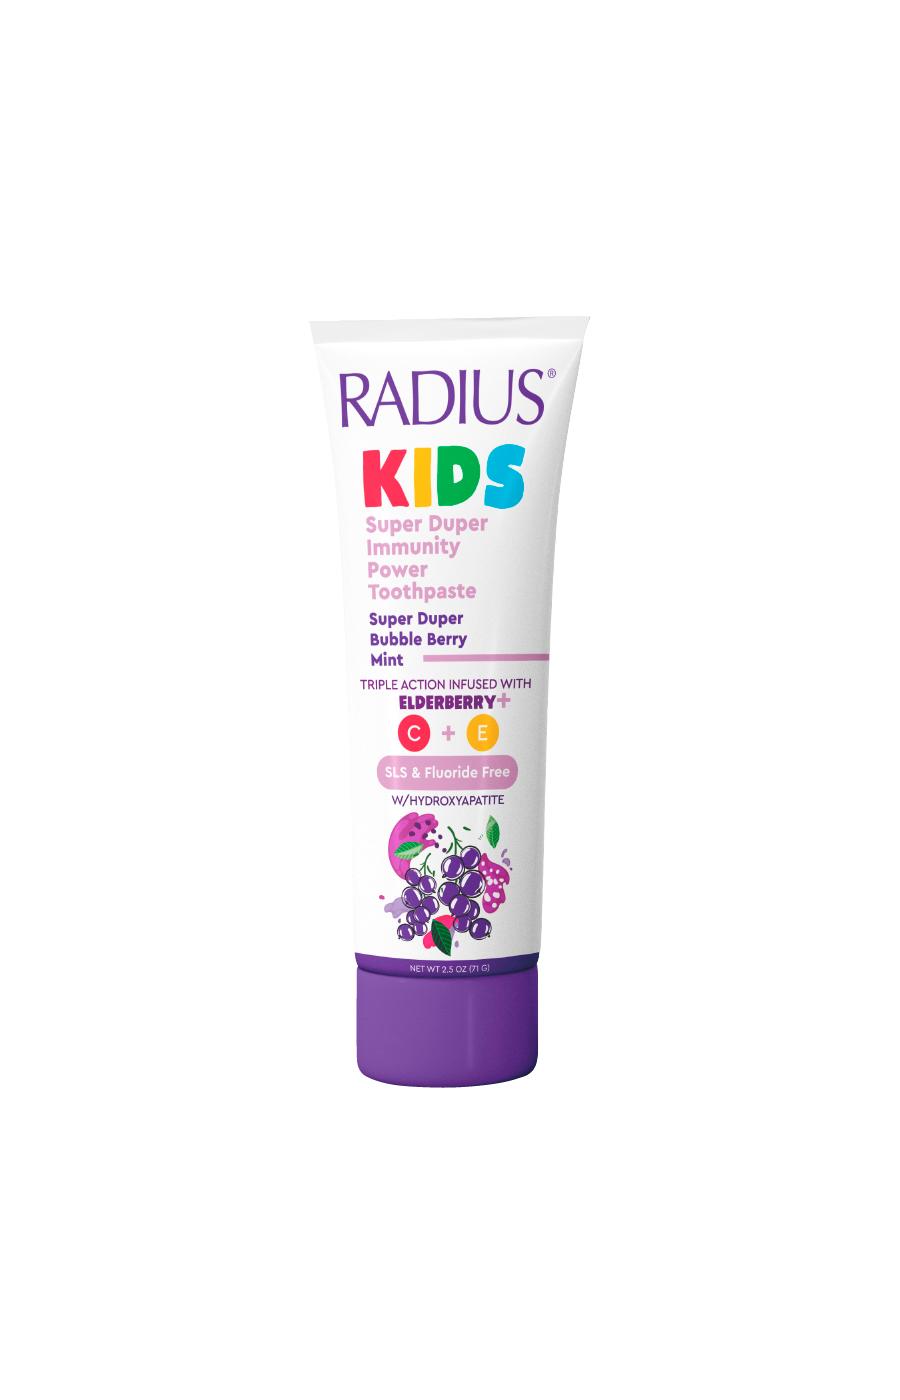 Radius Kids Immunity Power Toothpaste - Super Duper Bubble Berry Mint; image 2 of 3